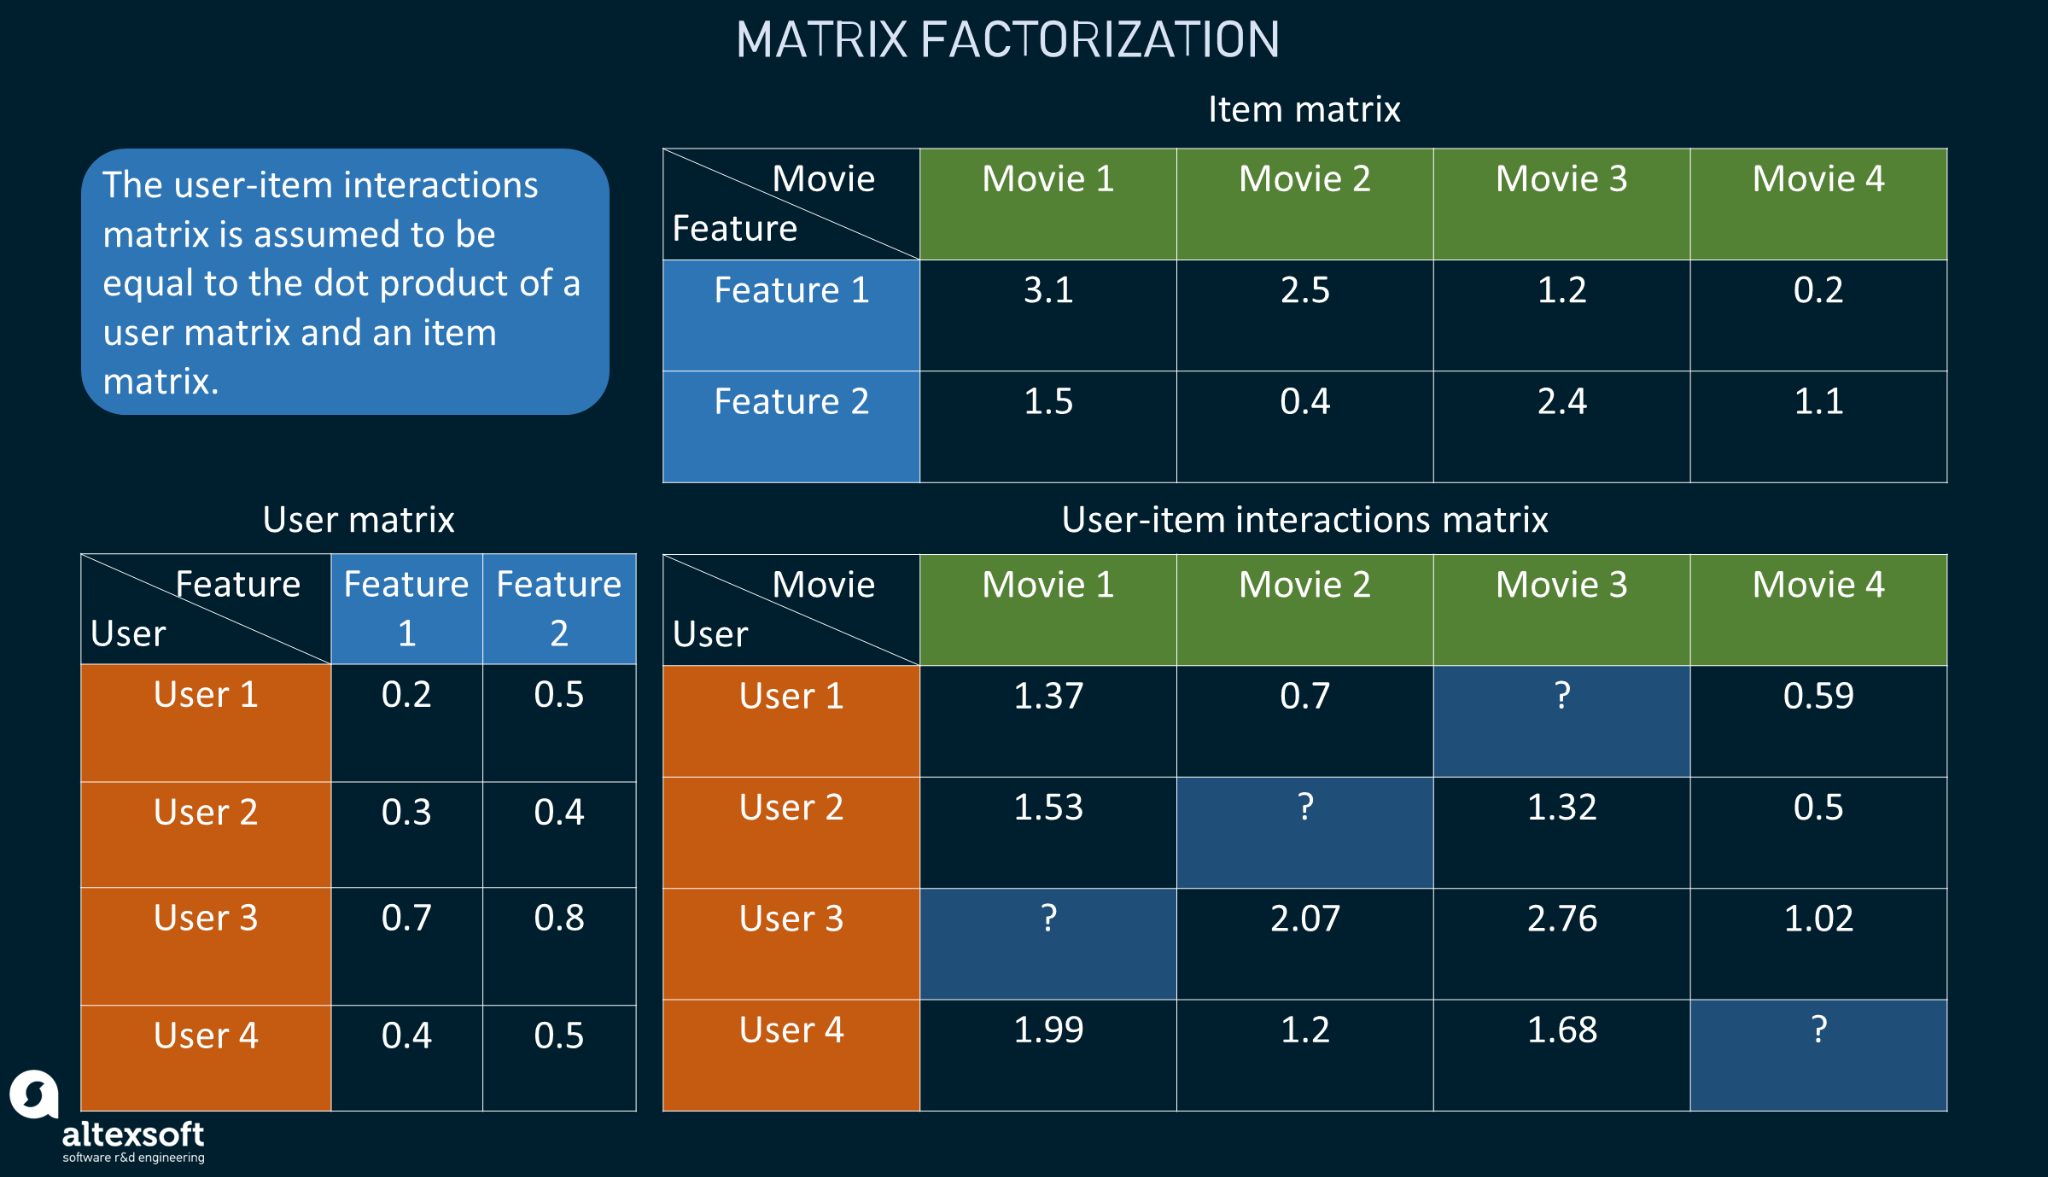 Matrix factorization